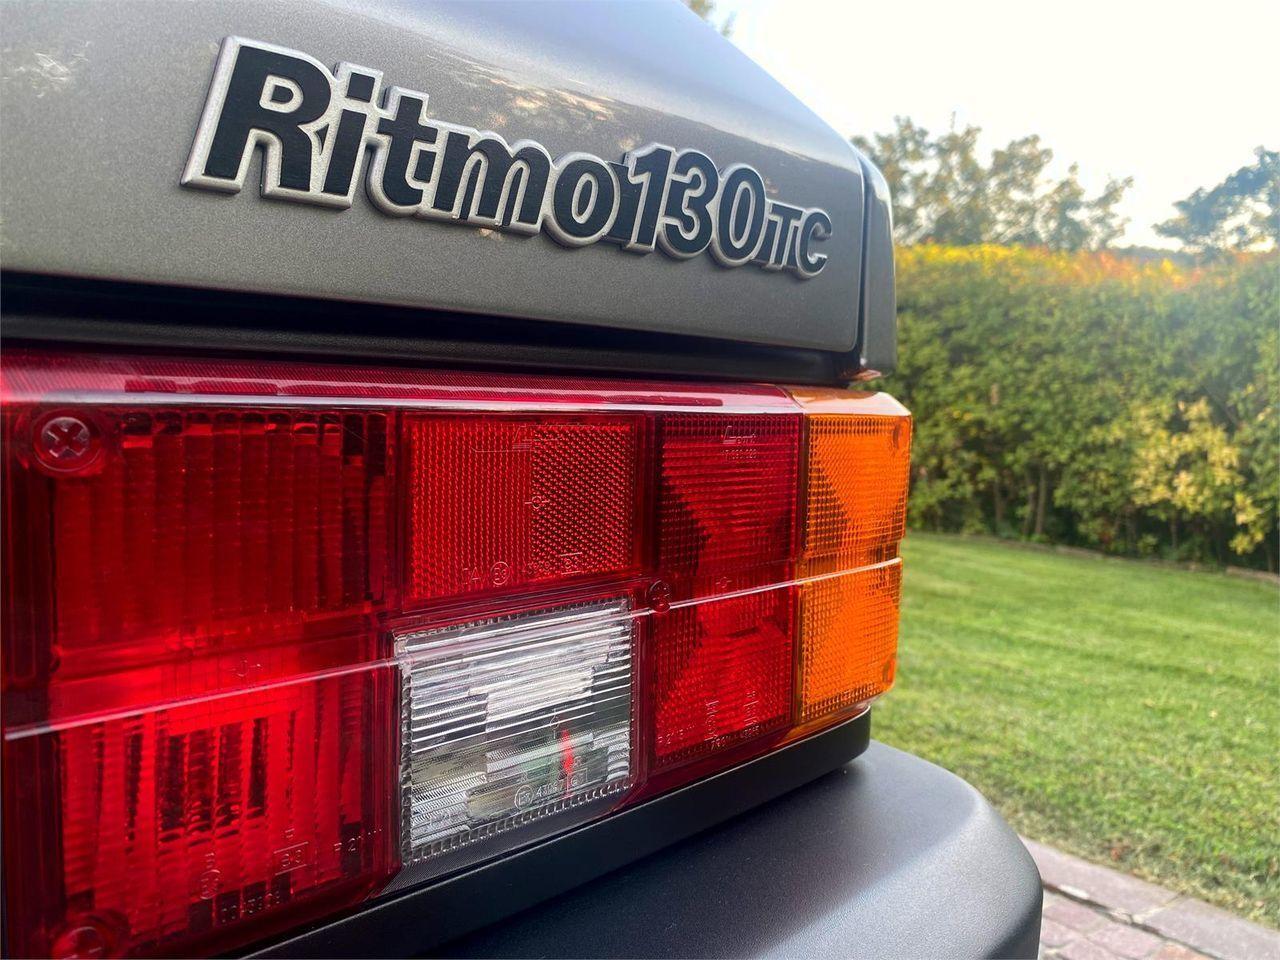 FIAT RITMO ABARTH 130 TC